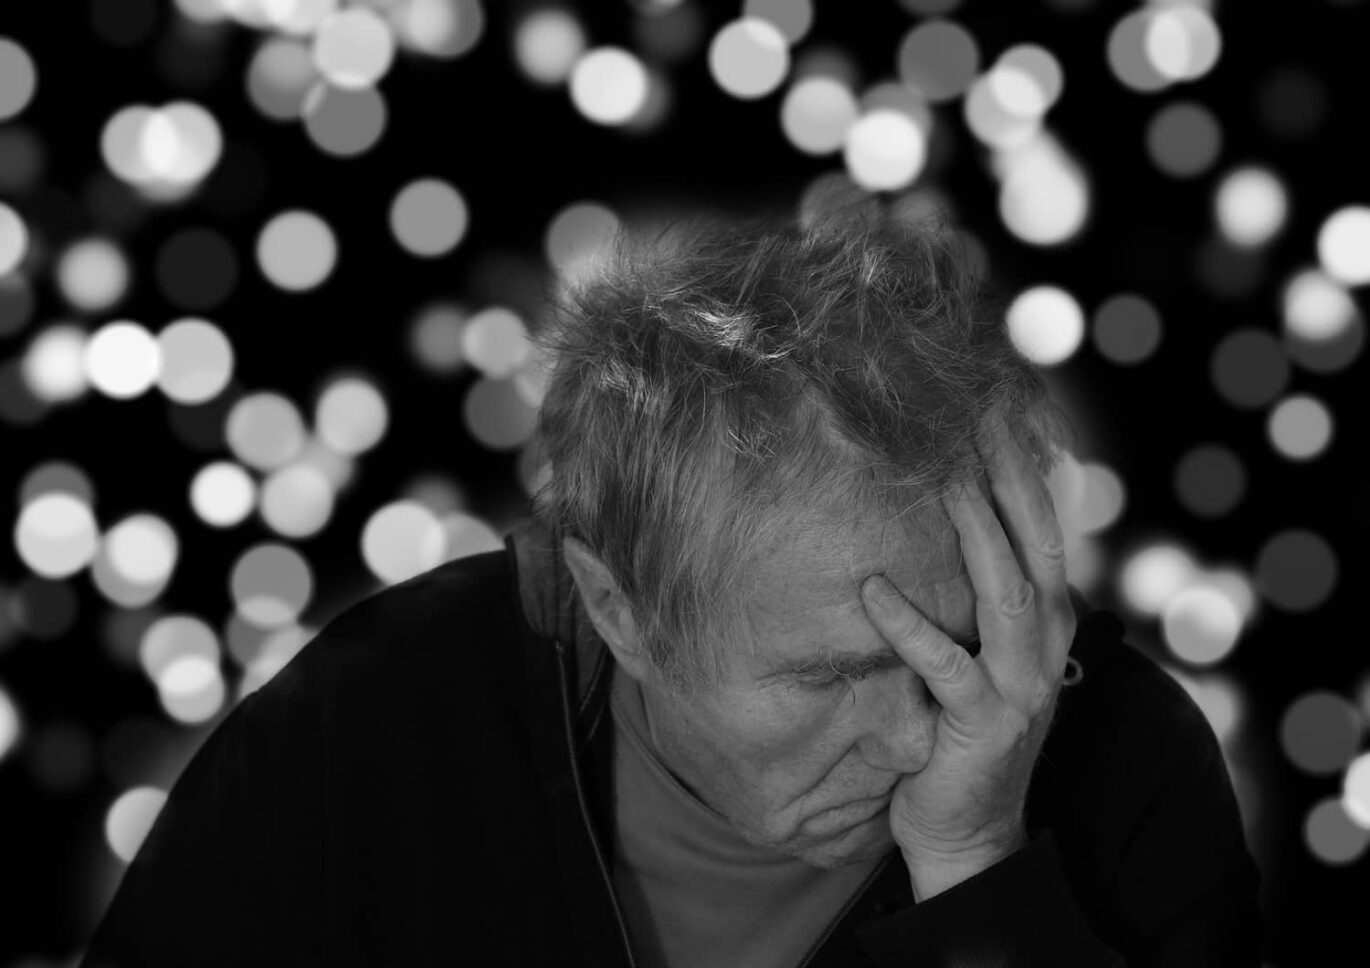 An upset old man having Alzheimer's disease